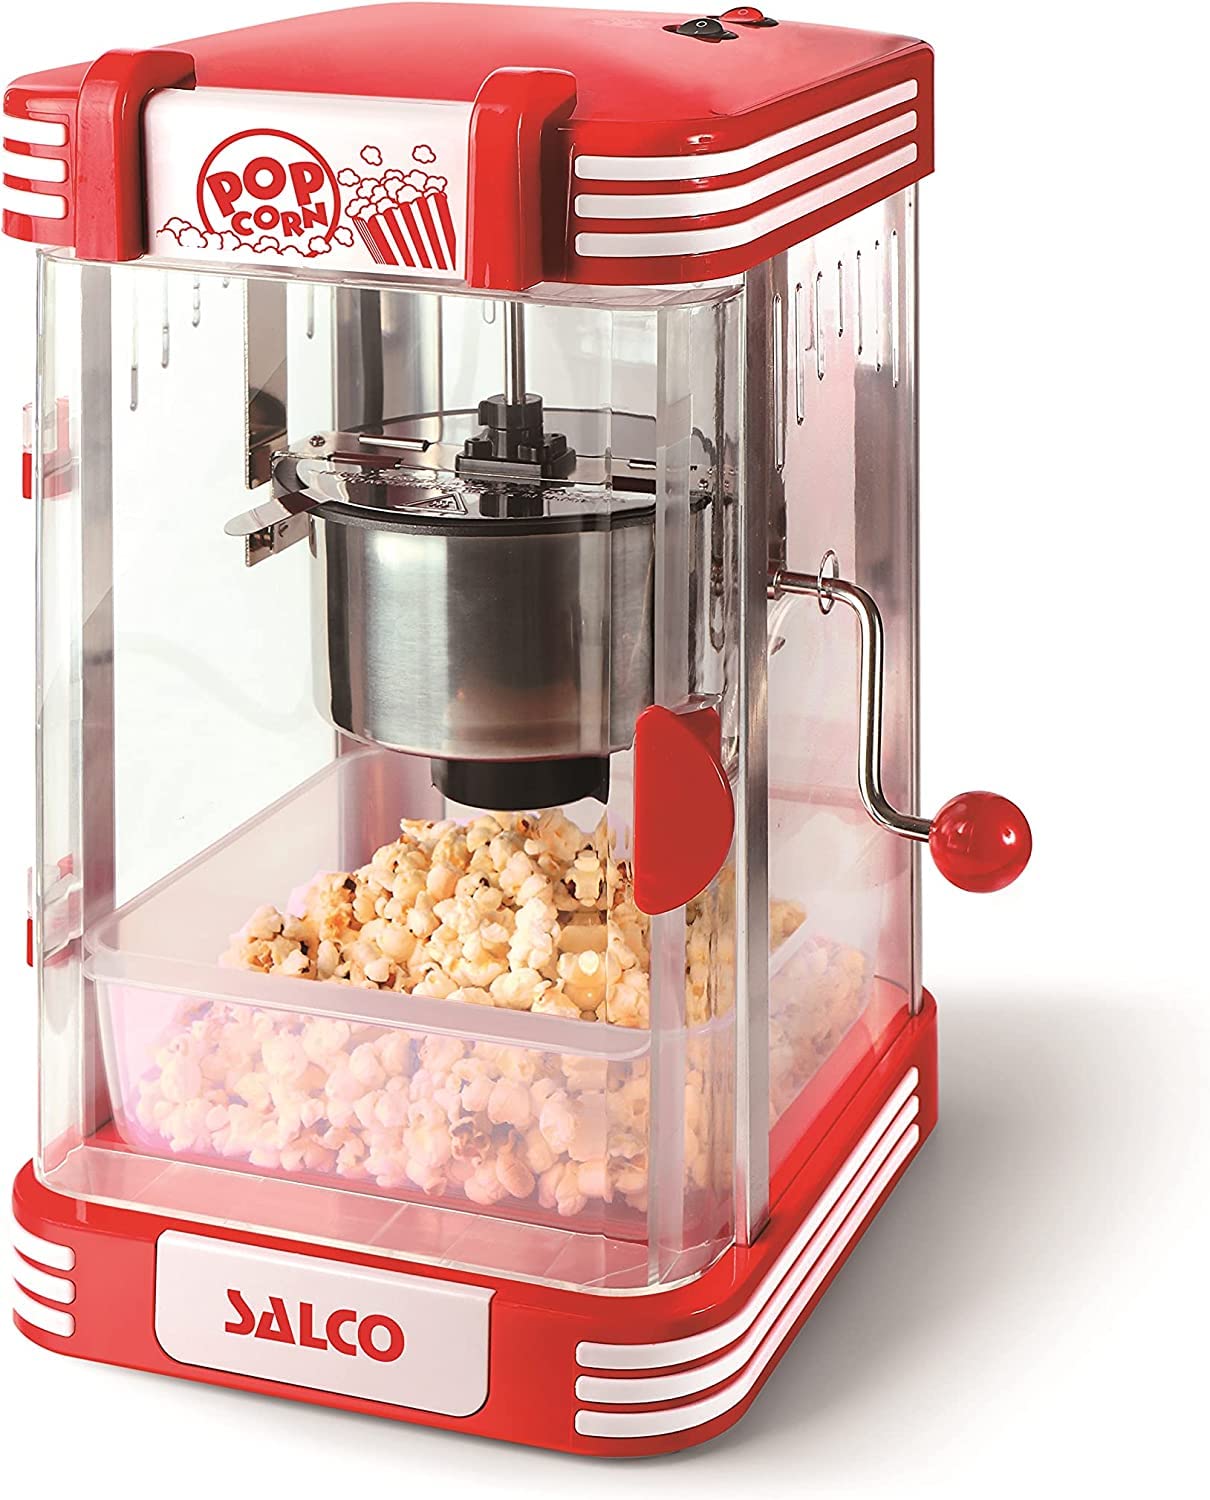 SALCO Retro-Popcornmaker SNP-24 Popcorn wie im Kino, Kessel mit Antihaft-Beschichtung, Eingebautes Rührsystem, Inkl. Popcornschale, 300 W